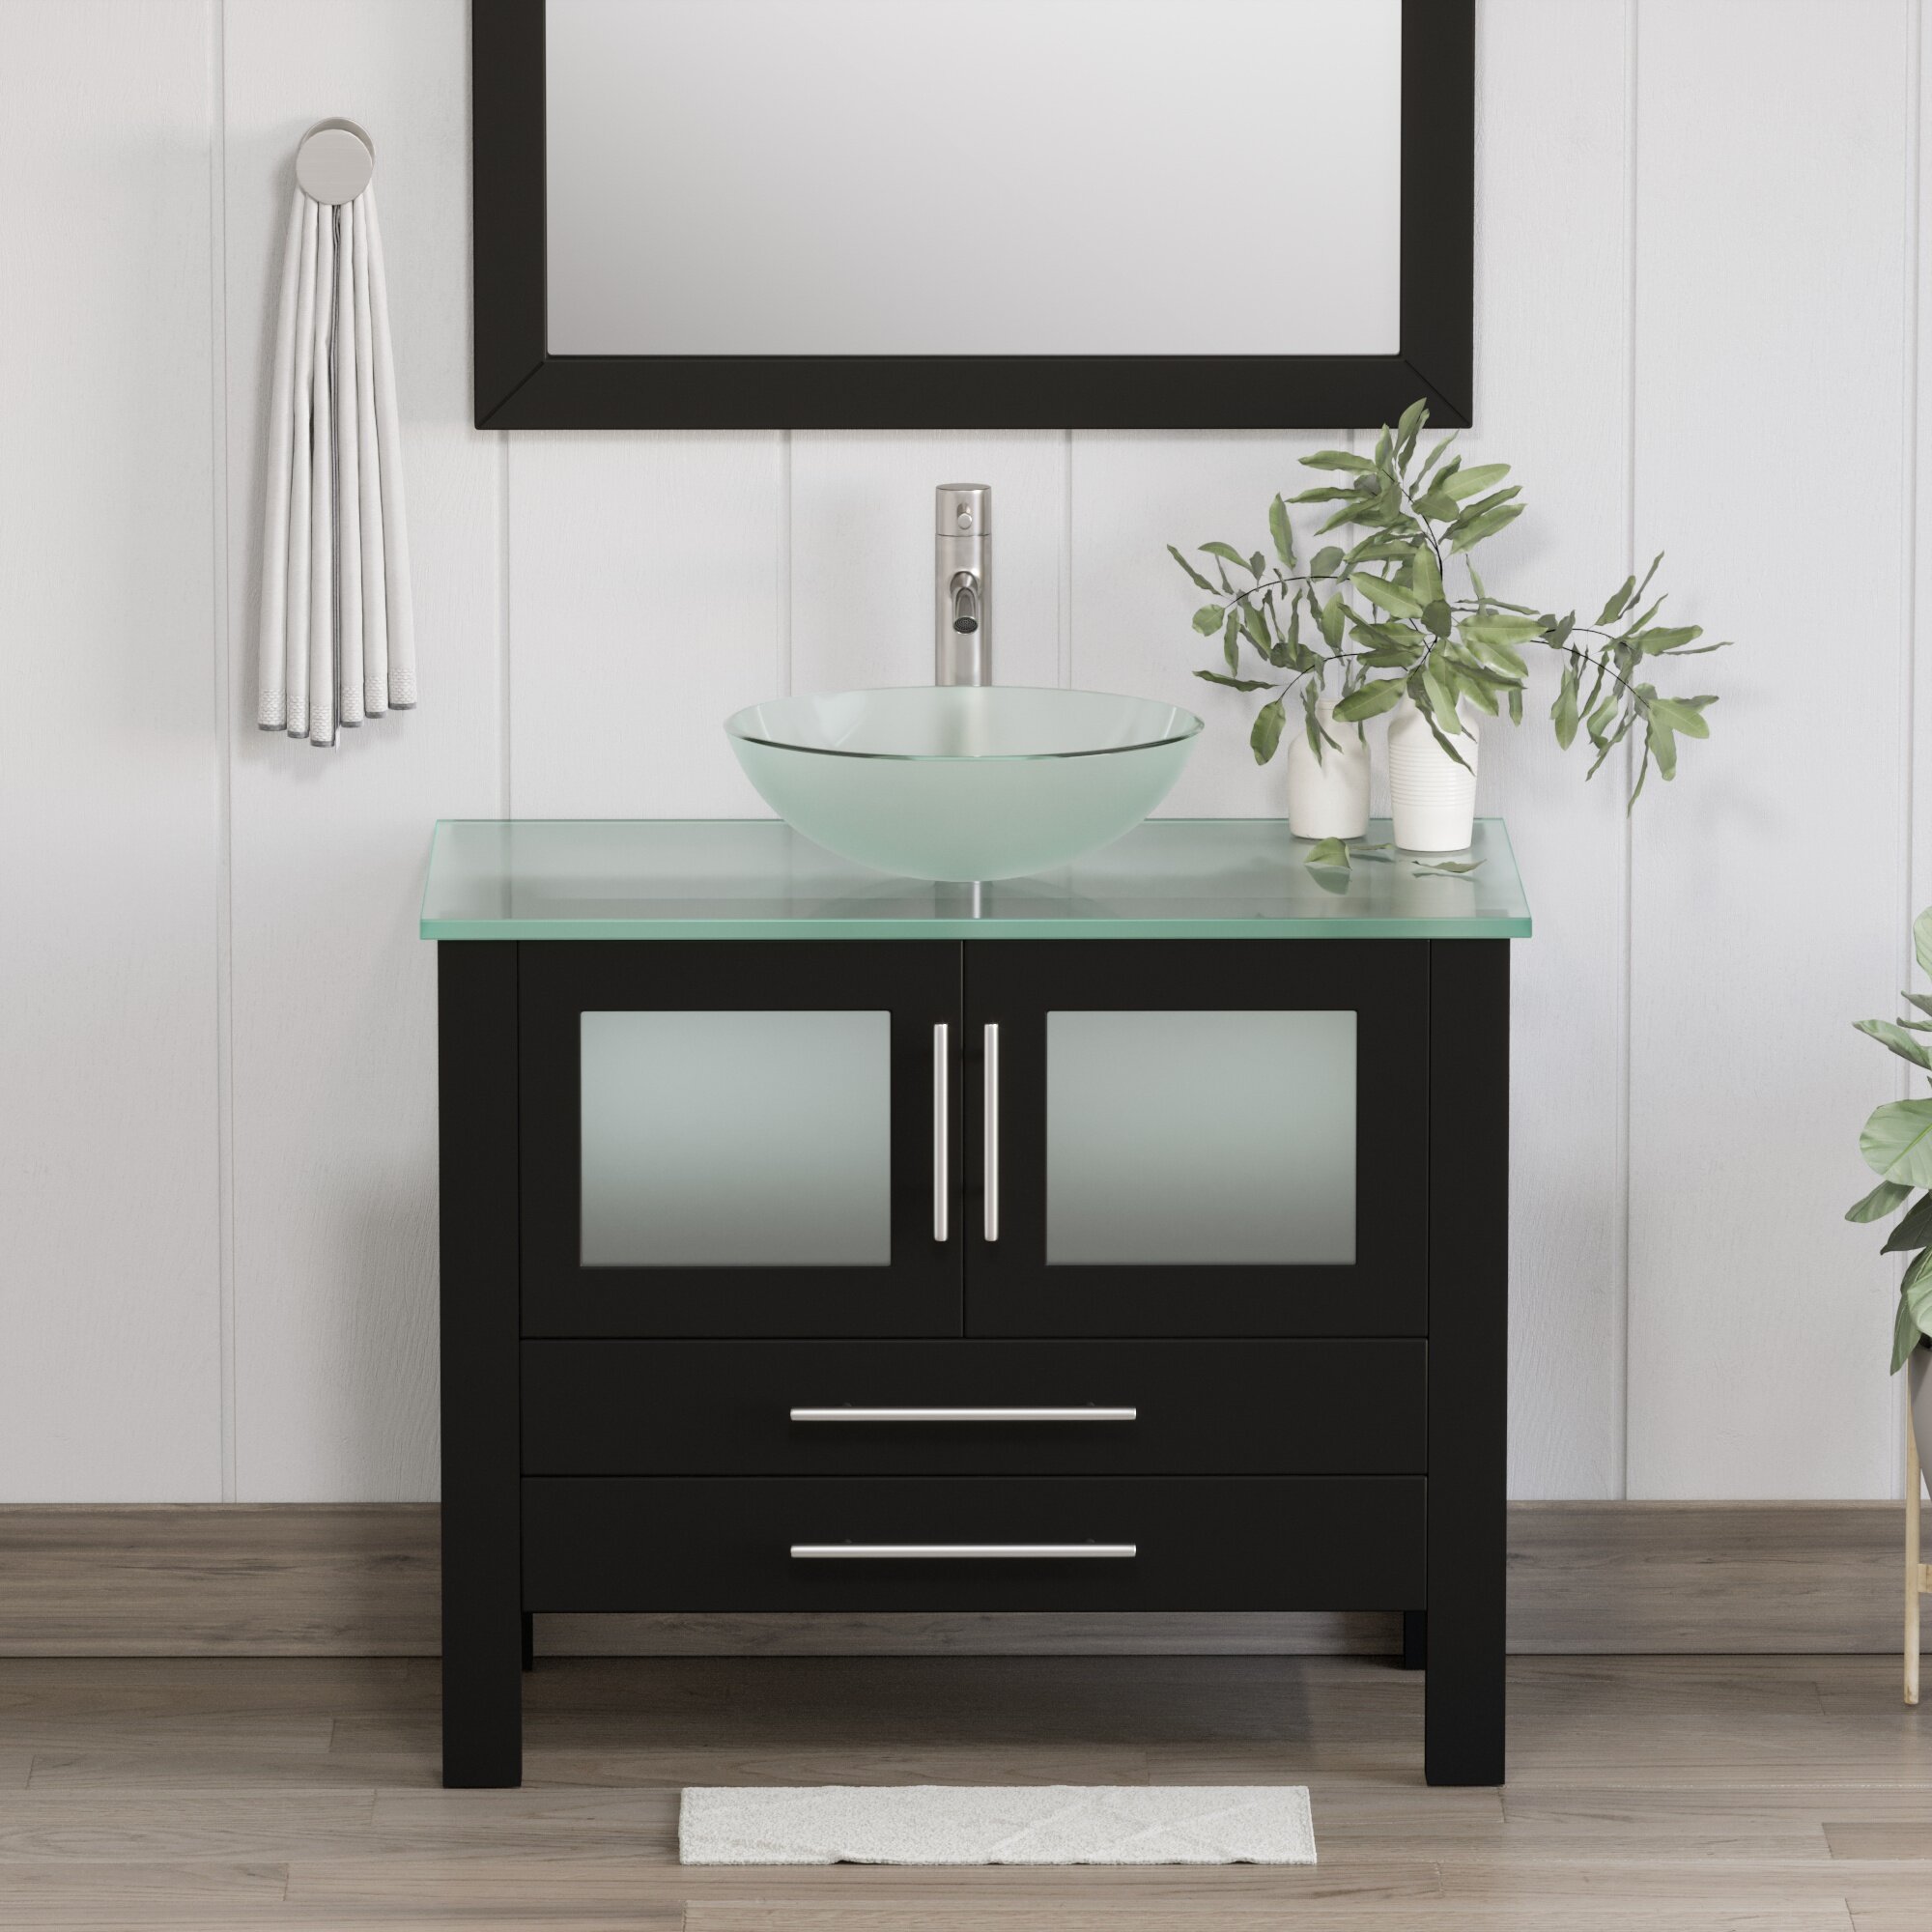 36" Bathroom Vanity Set Modern W/Tempered Glass Vessel Sink Small Side Cabinet 